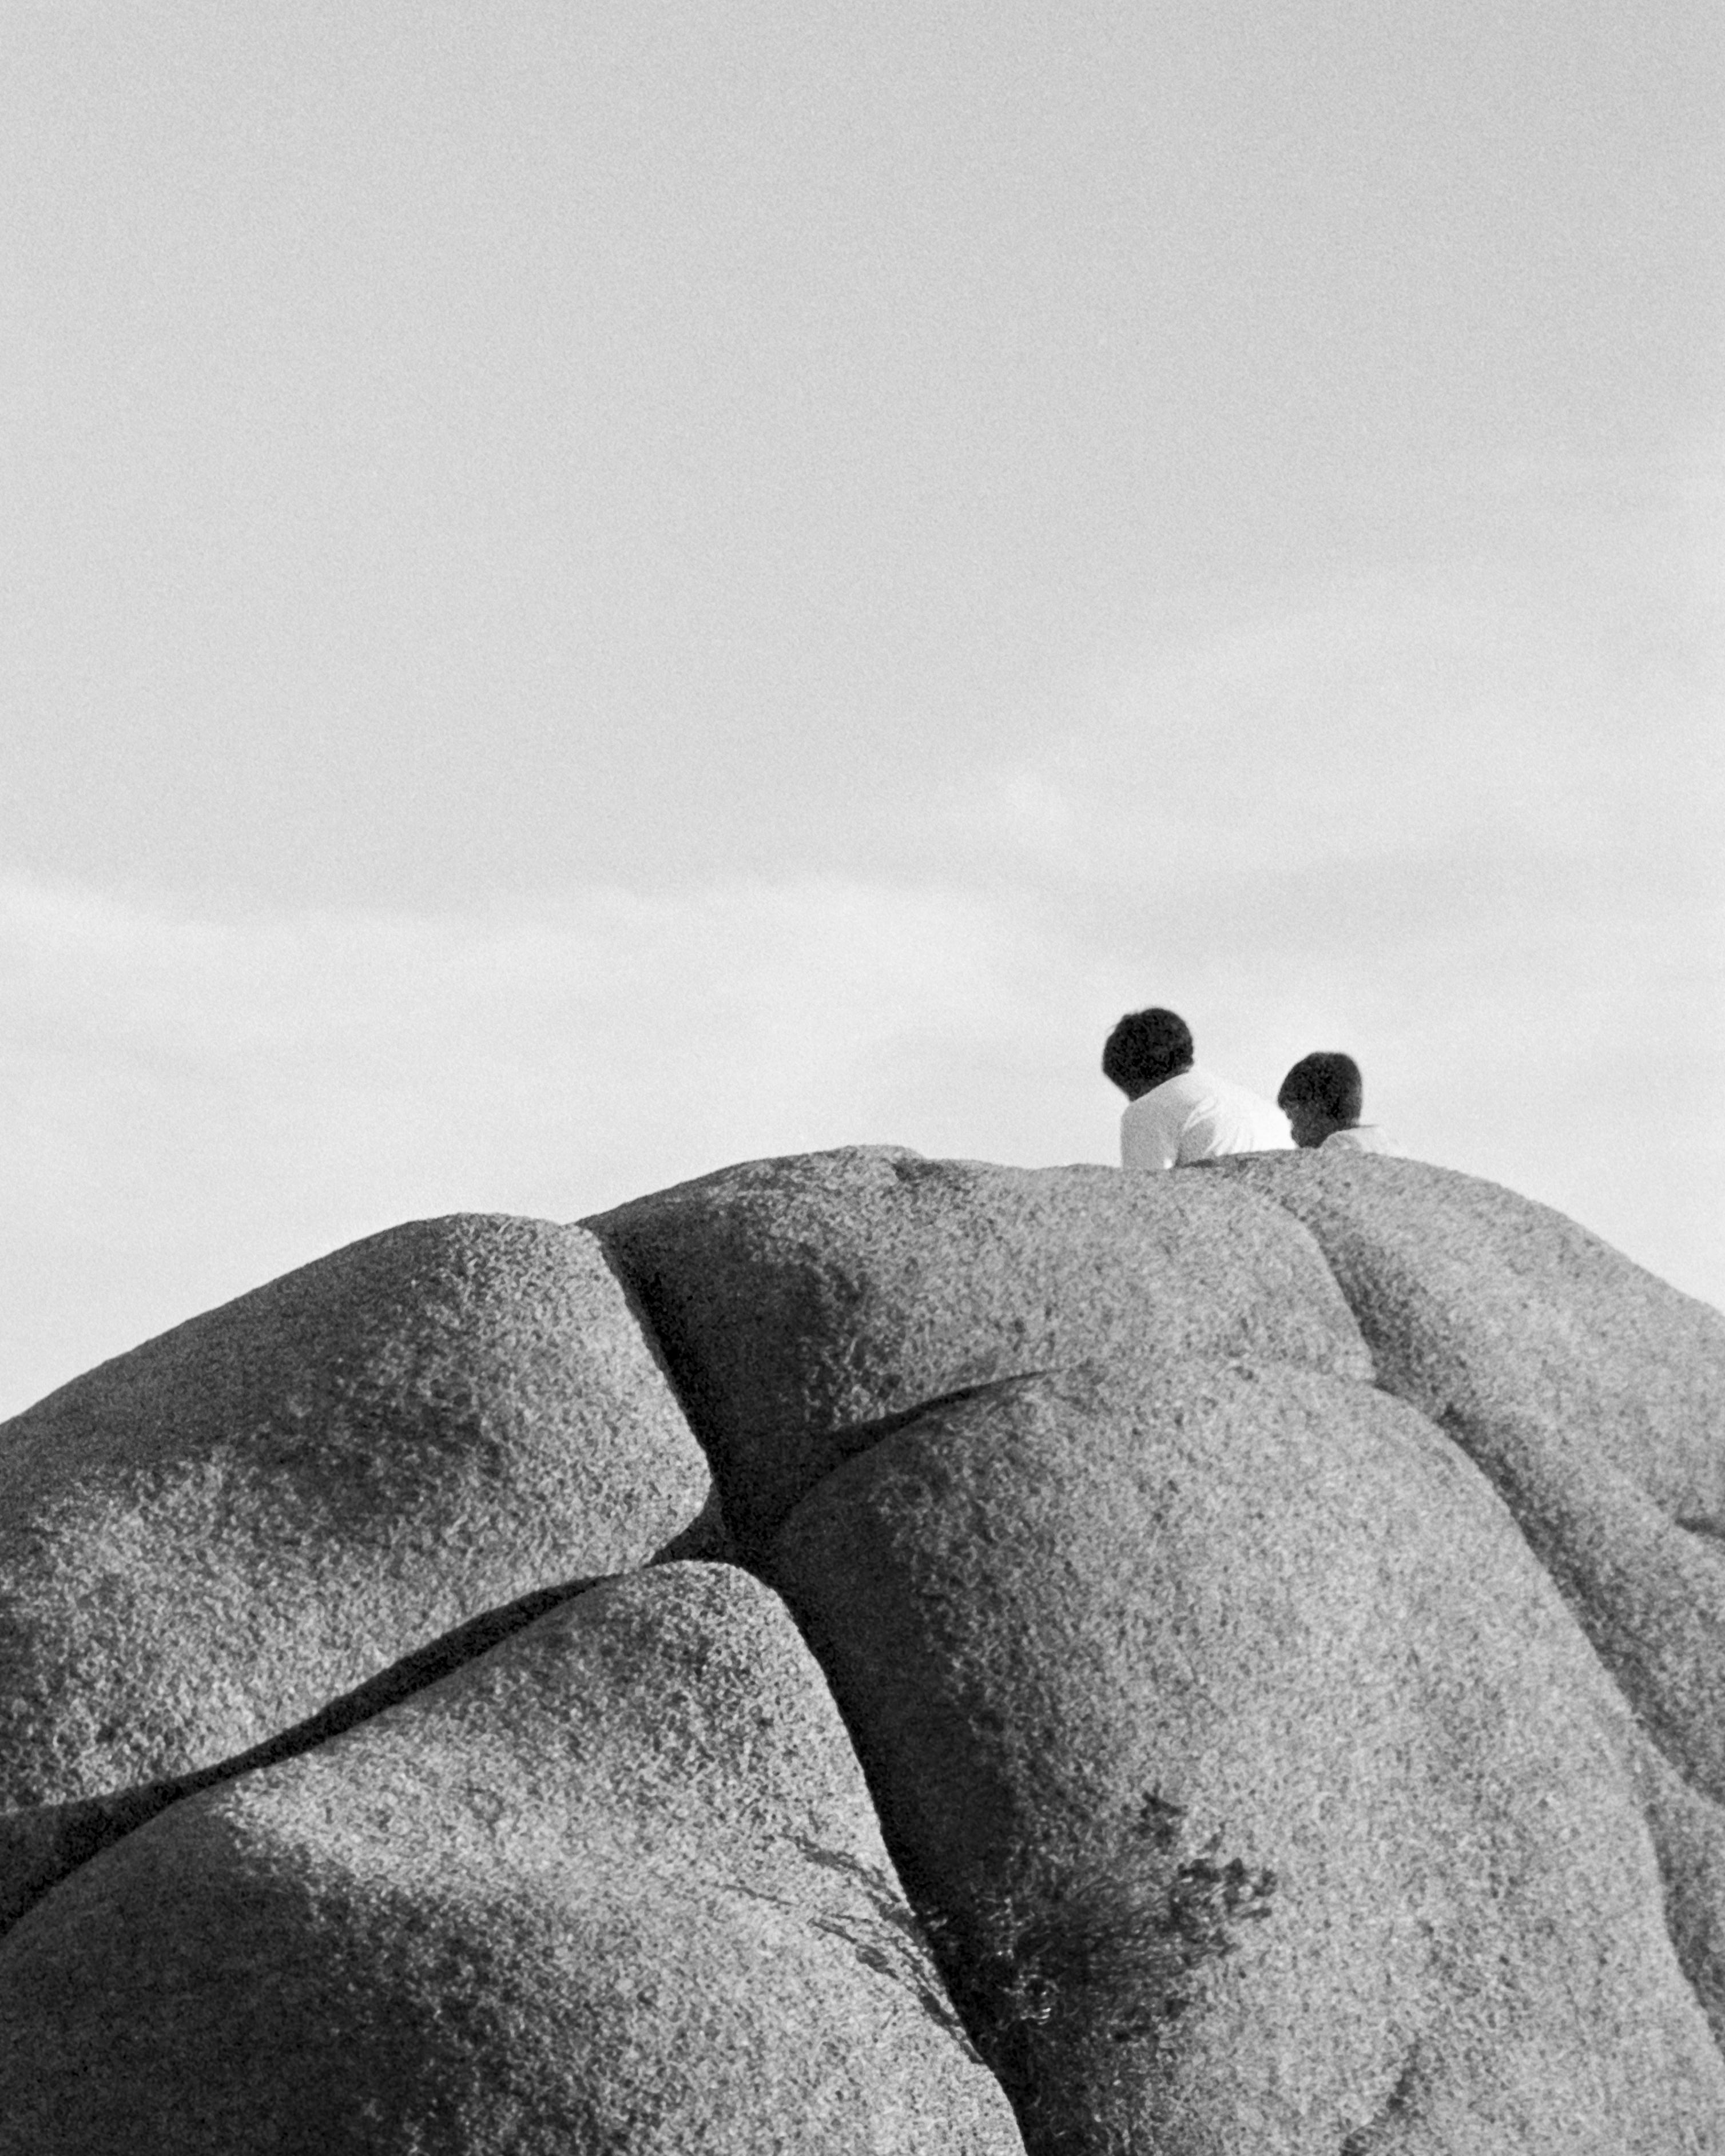 Jumbo Rocks Skull - analogue black and white desert rocks  - Contemporary Photograph by Ugne Pouwell